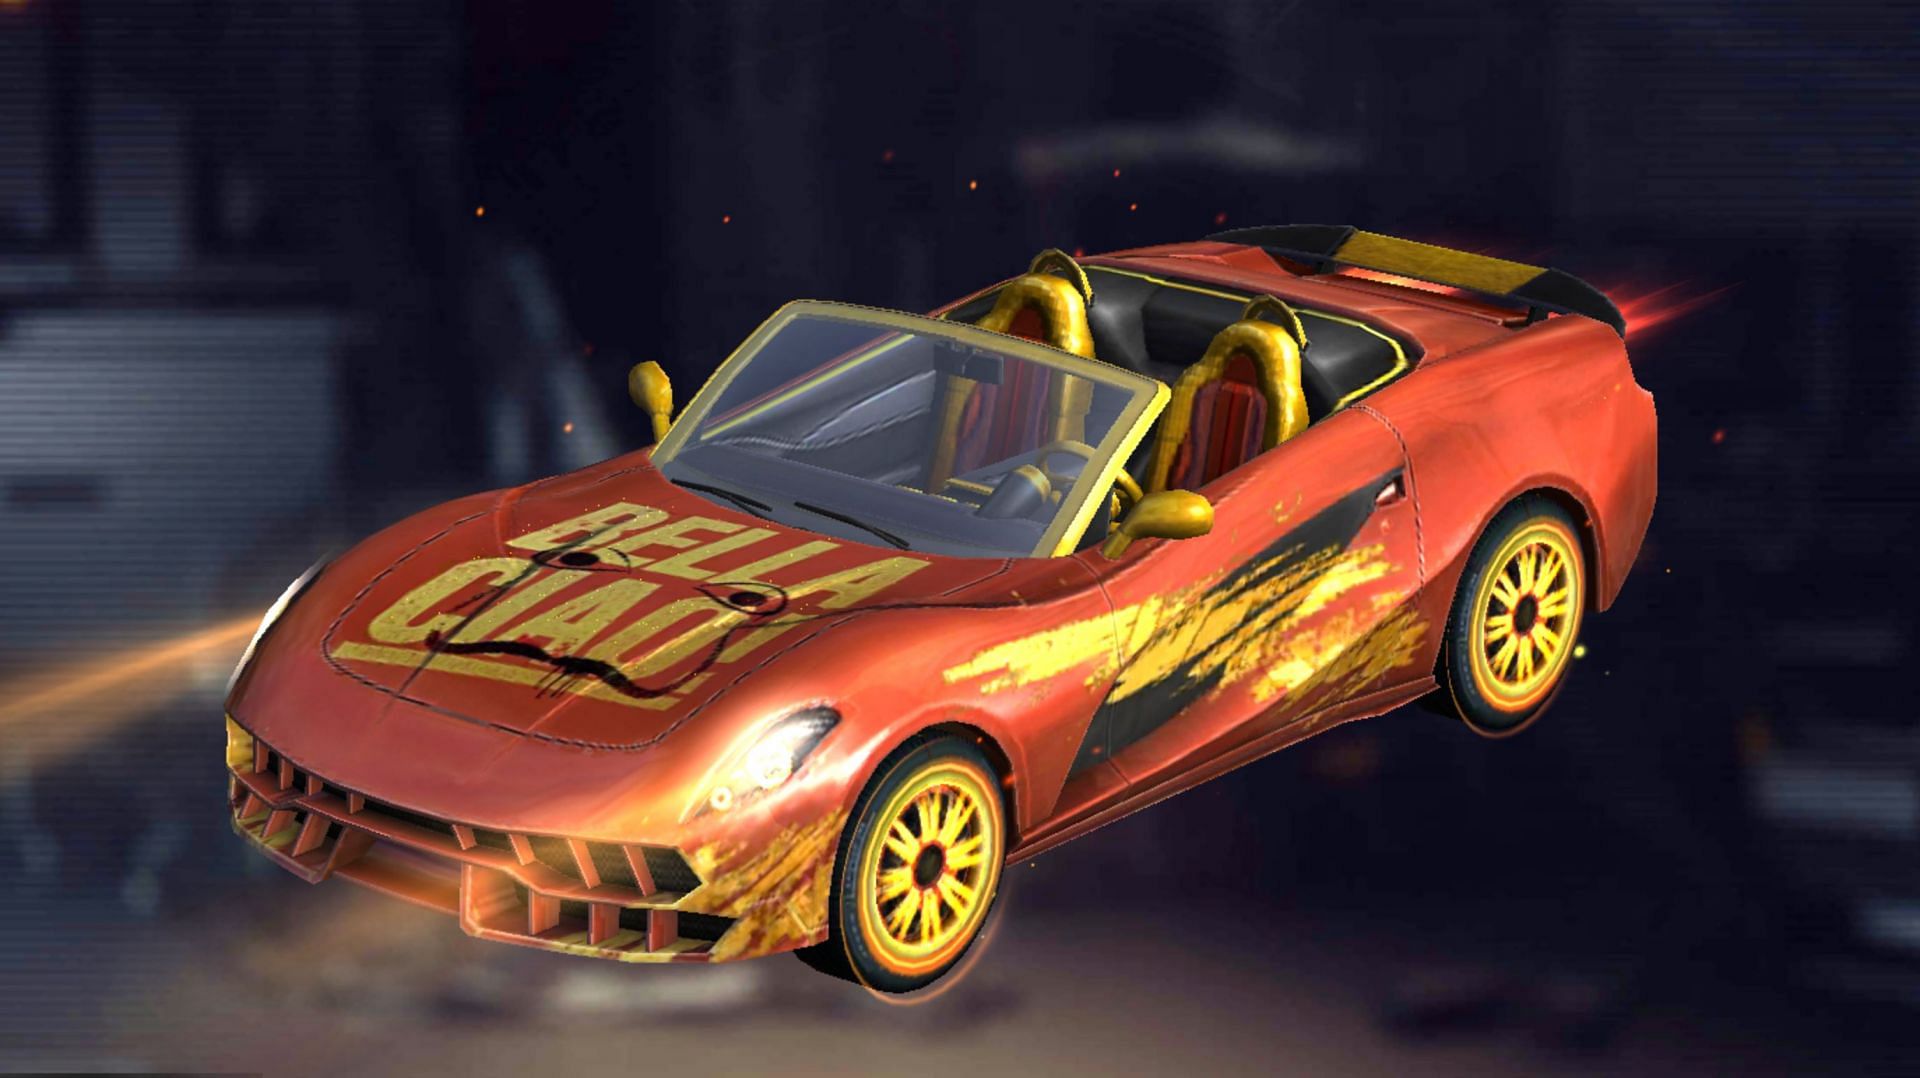 The Money Heist themed car skin (Image via Free Fire)